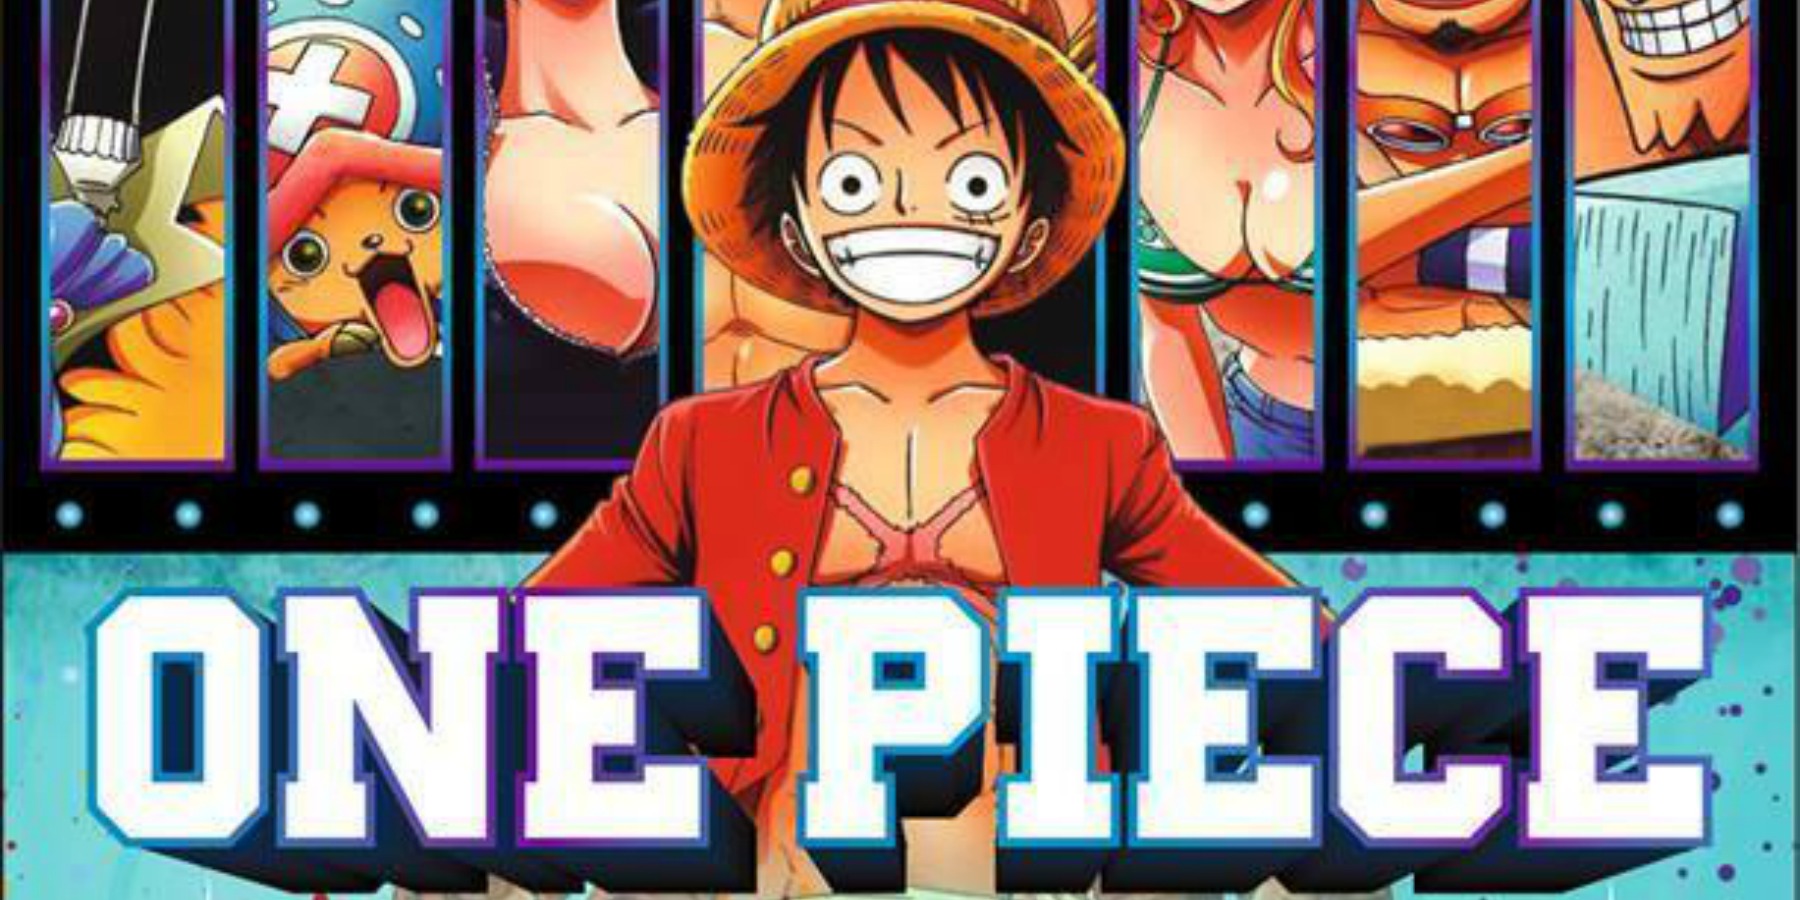 One Piece Fiesta | 23 de julio en C.C. Festiva